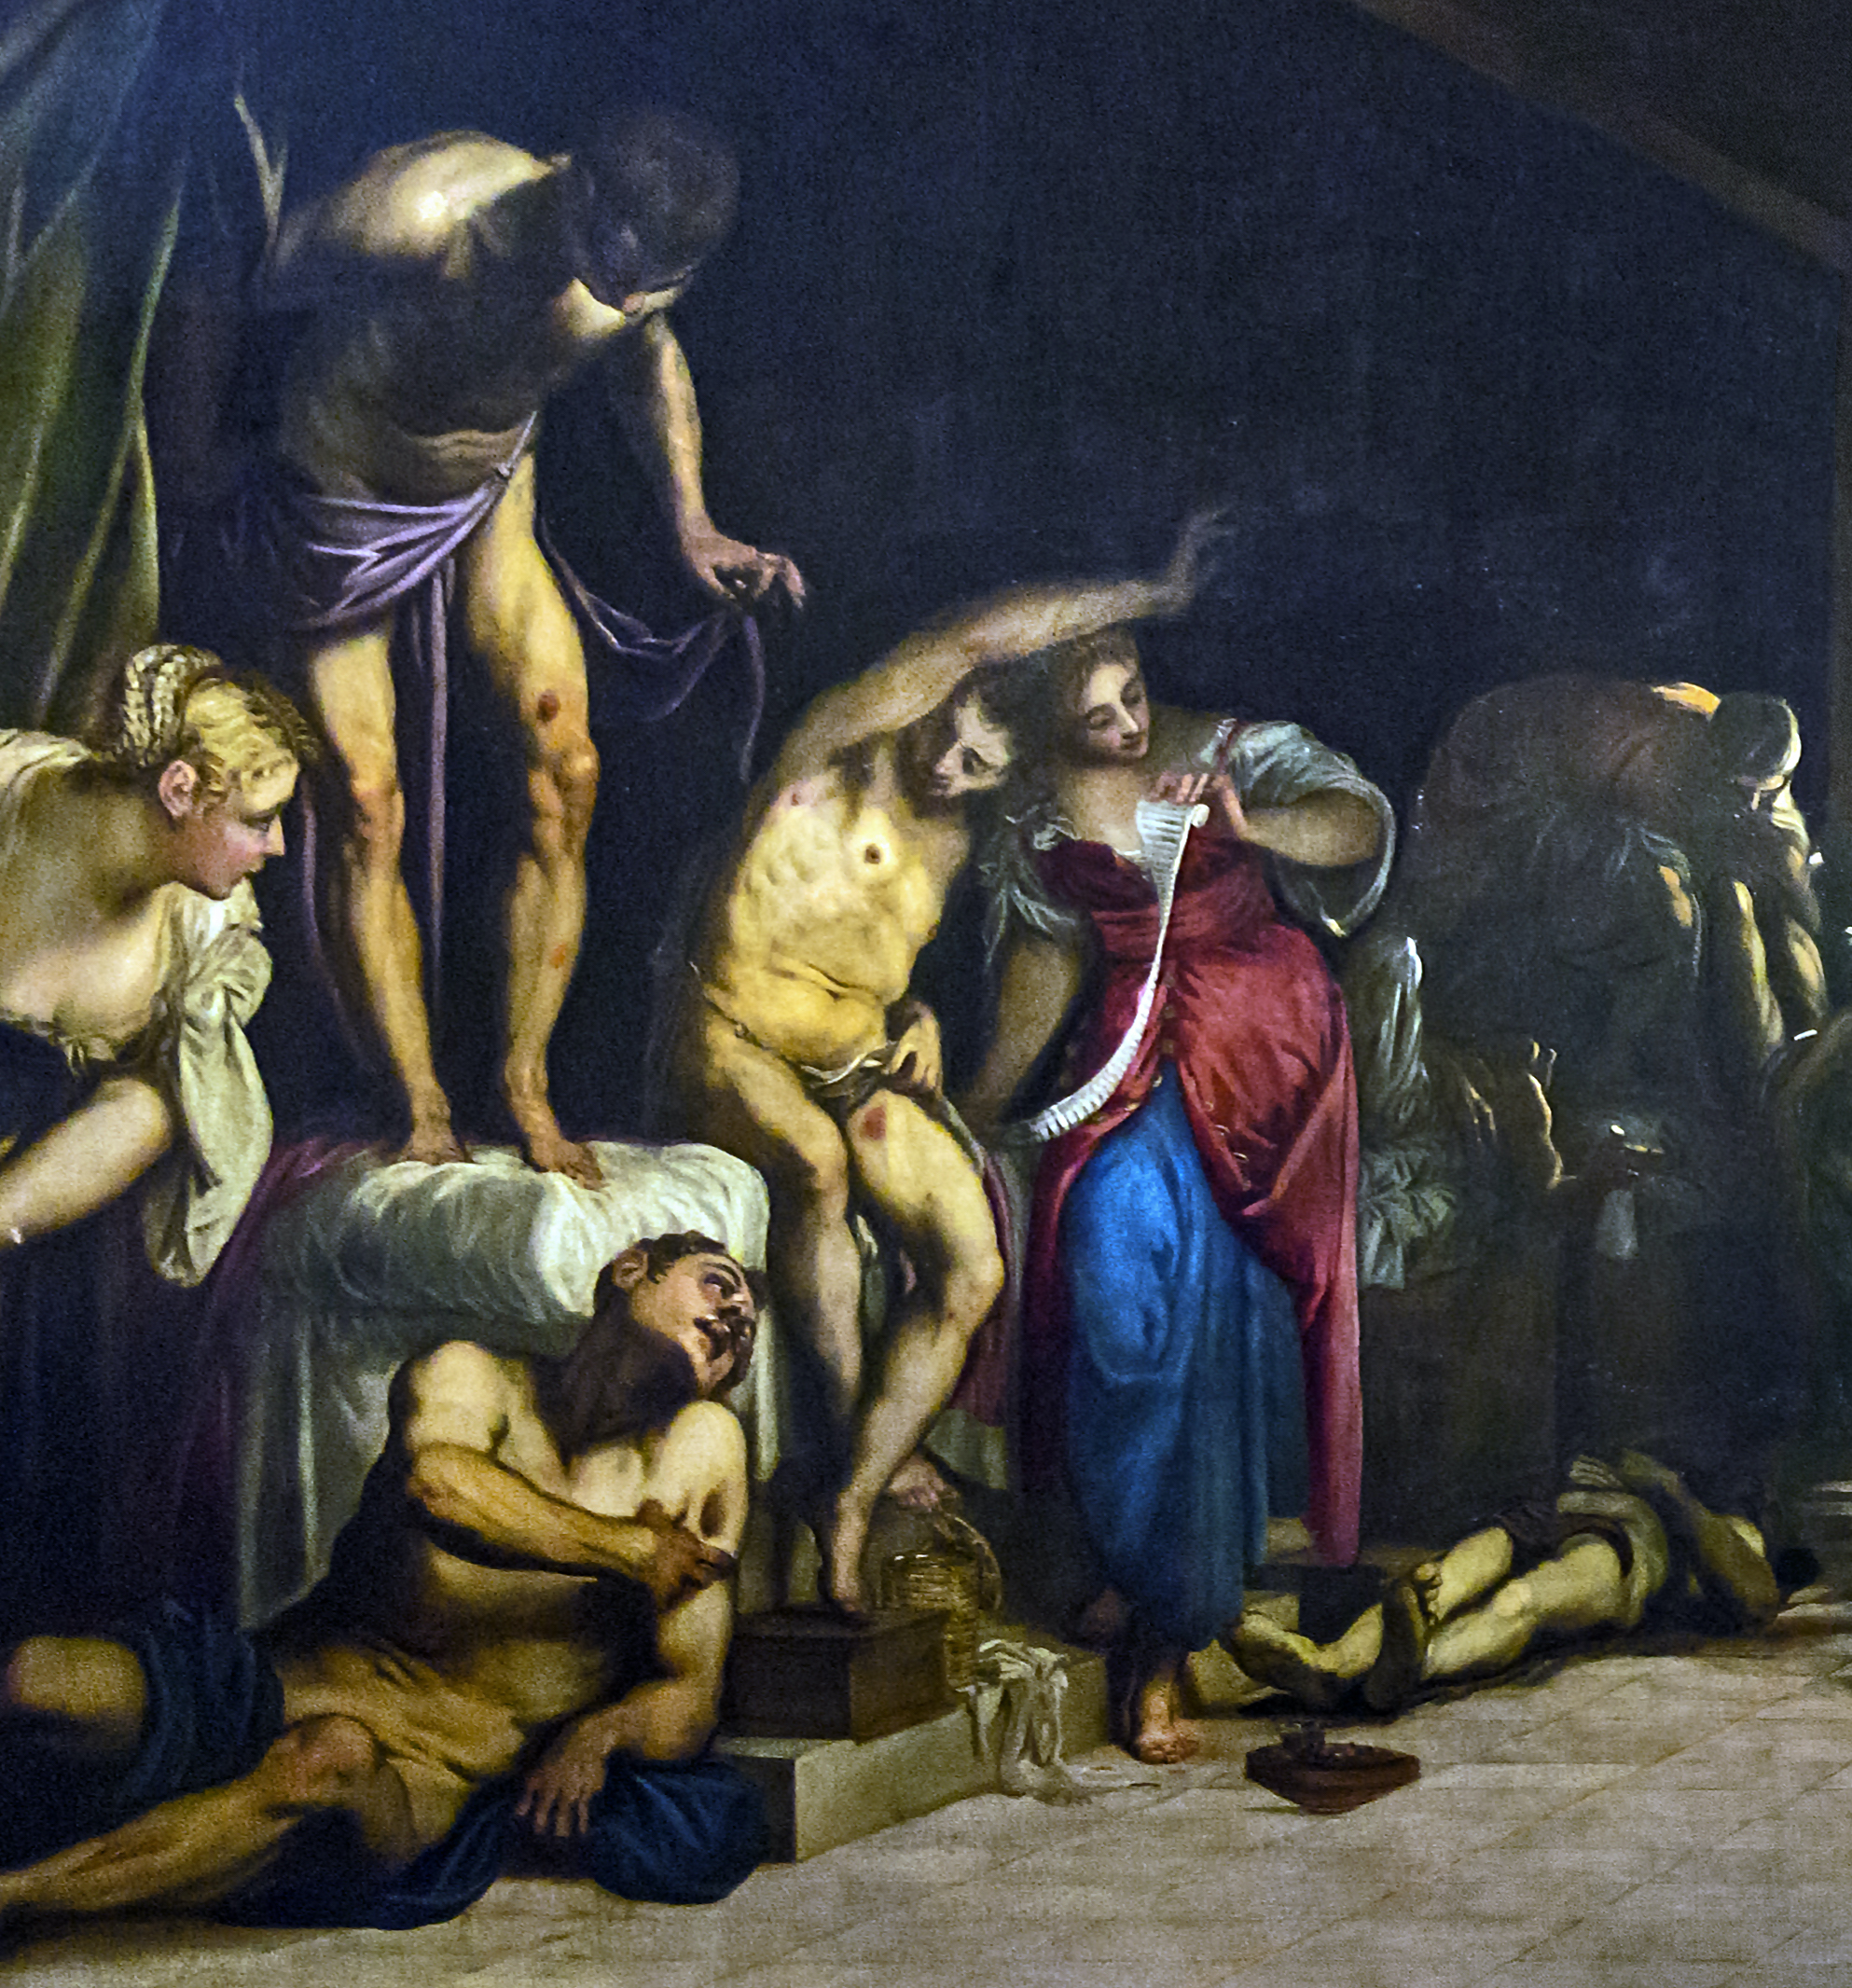 St. Rocco Healing the Plague-Stricken